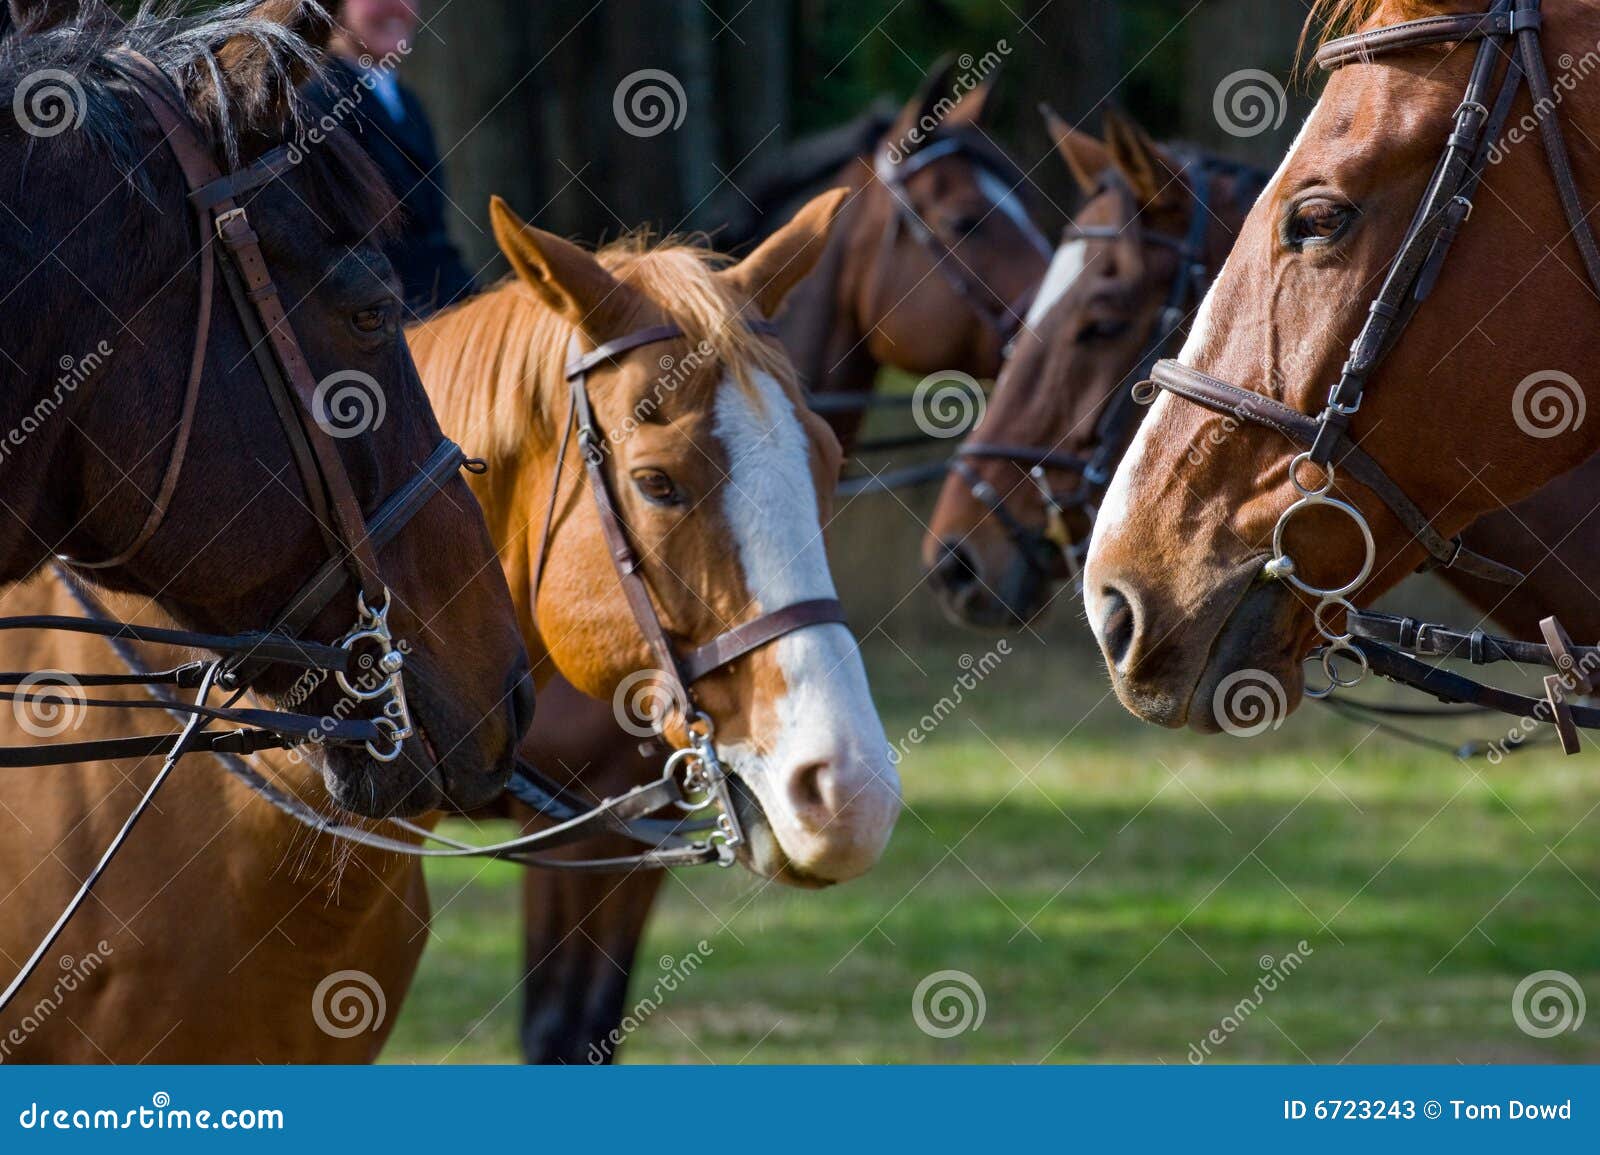 horses wearing riding tack